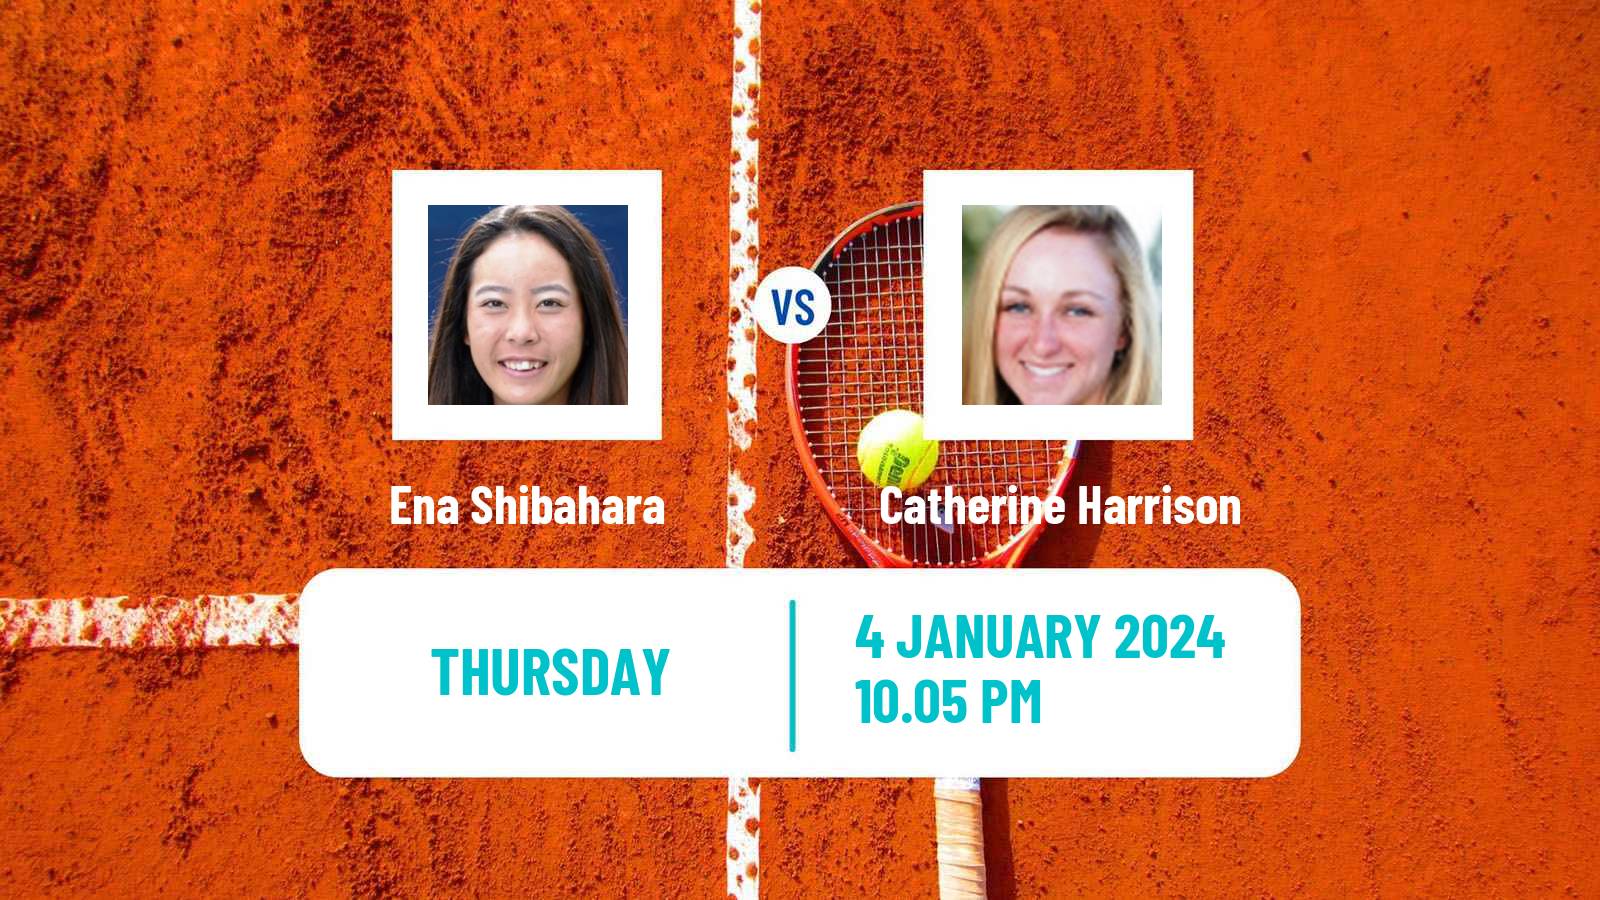 Tennis ITF W50 Nonthaburi Women Ena Shibahara - Catherine Harrison